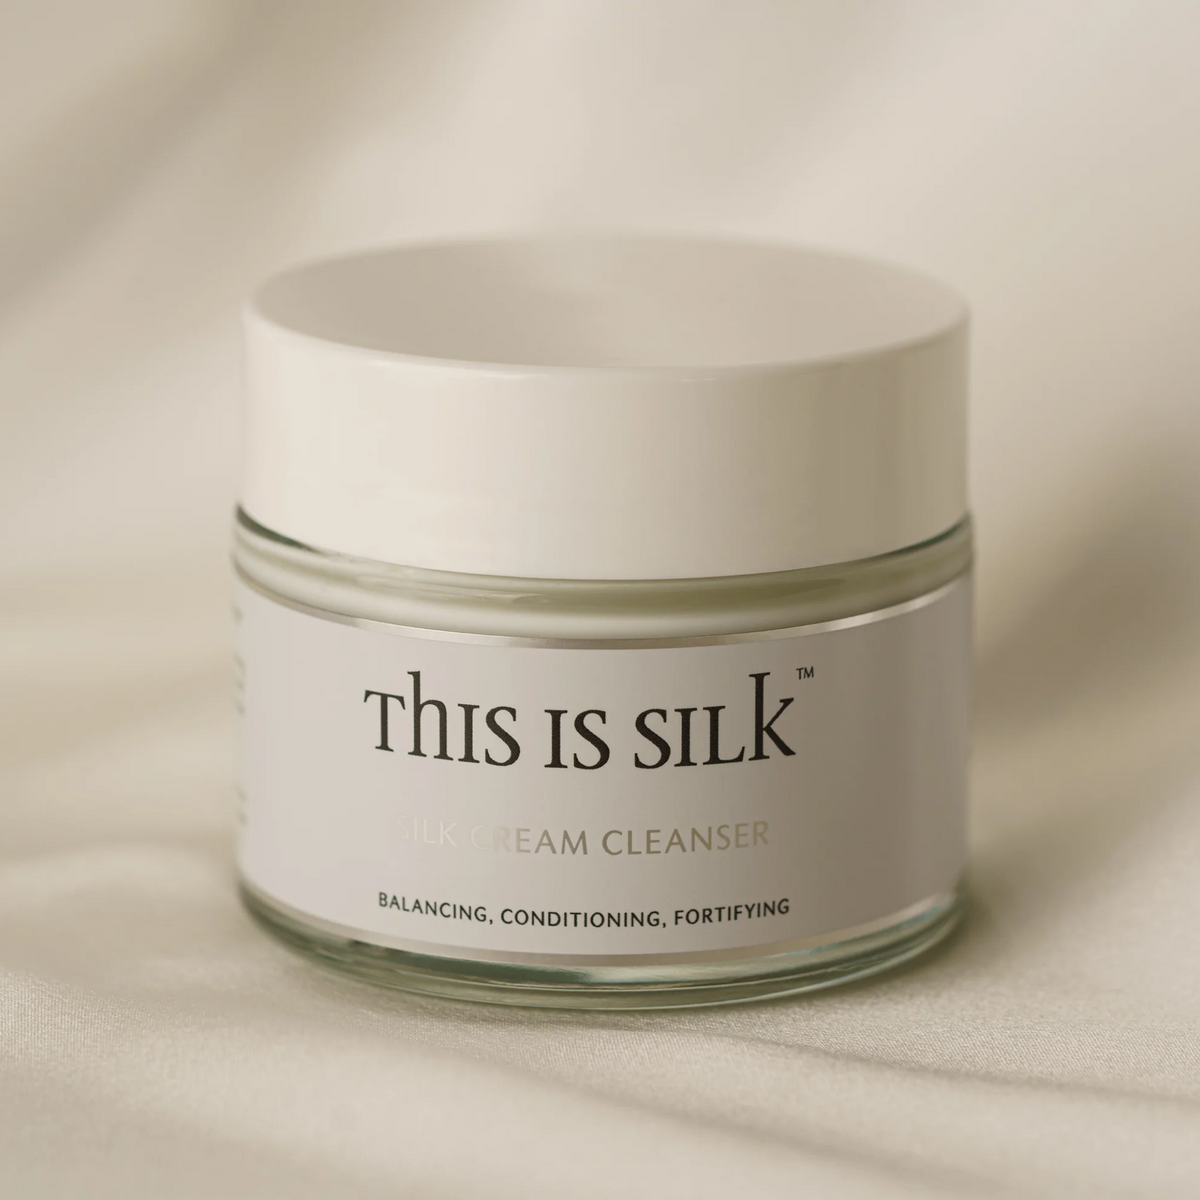 NEW! The Ultimate Silk Skincare Ritual - Silk Pillowcase Included